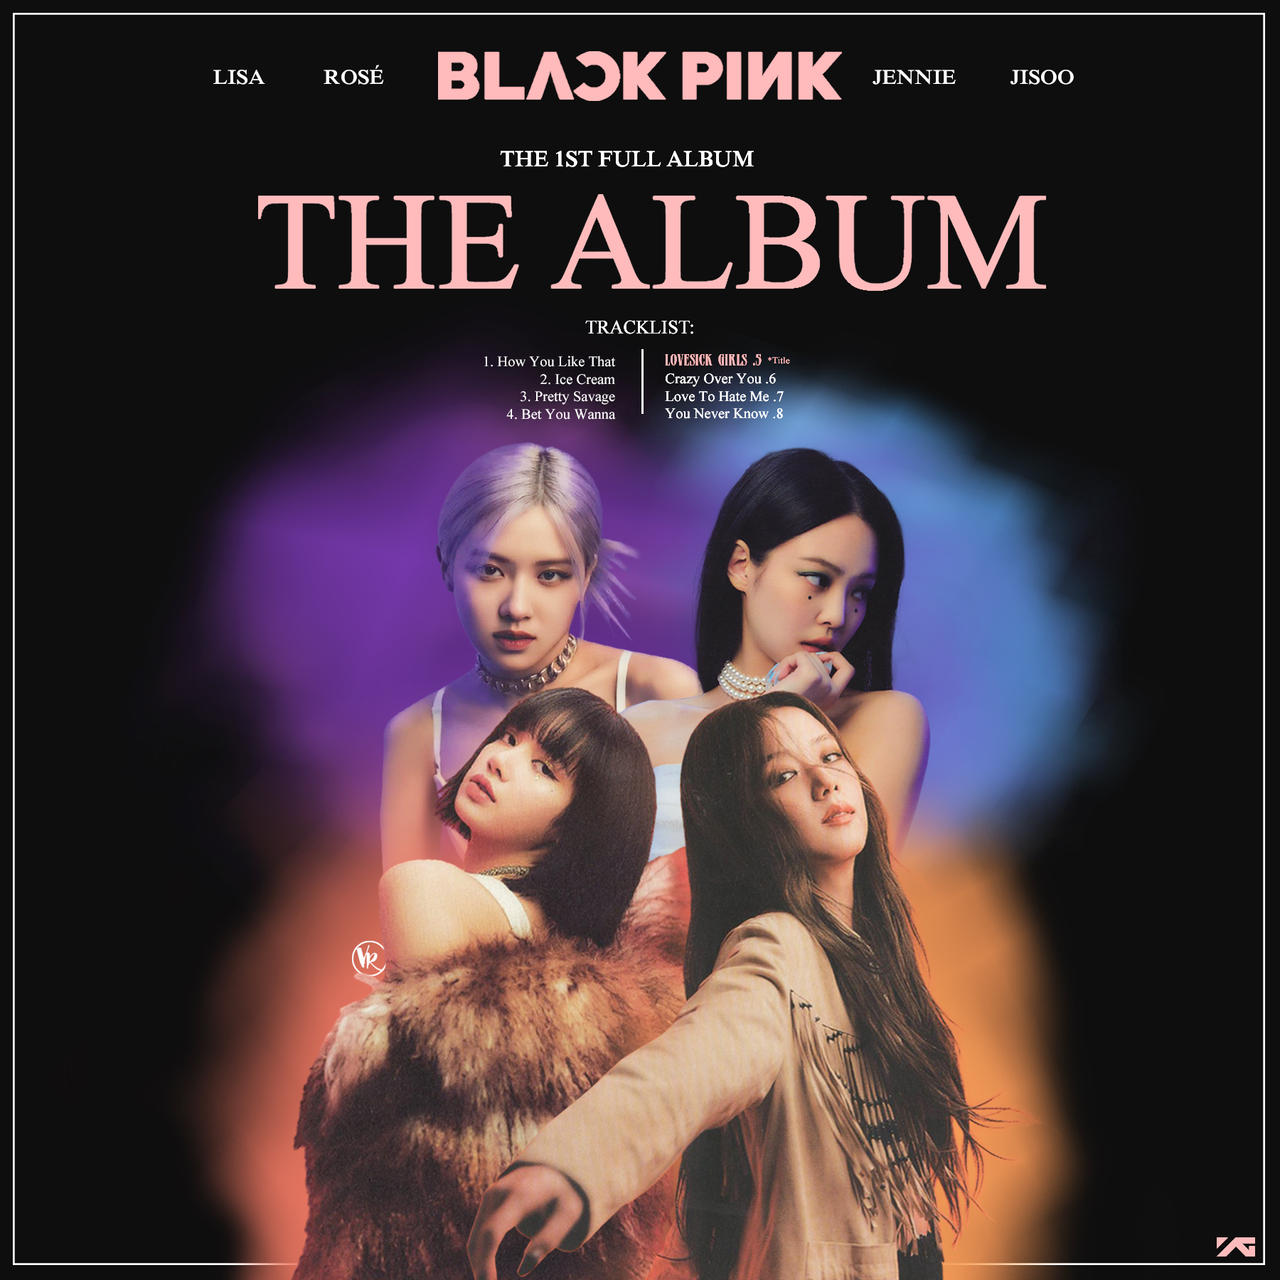 BLACKPINK - BLACKPINK 'THE ALBUM' TRACKLIST POSTER 1st